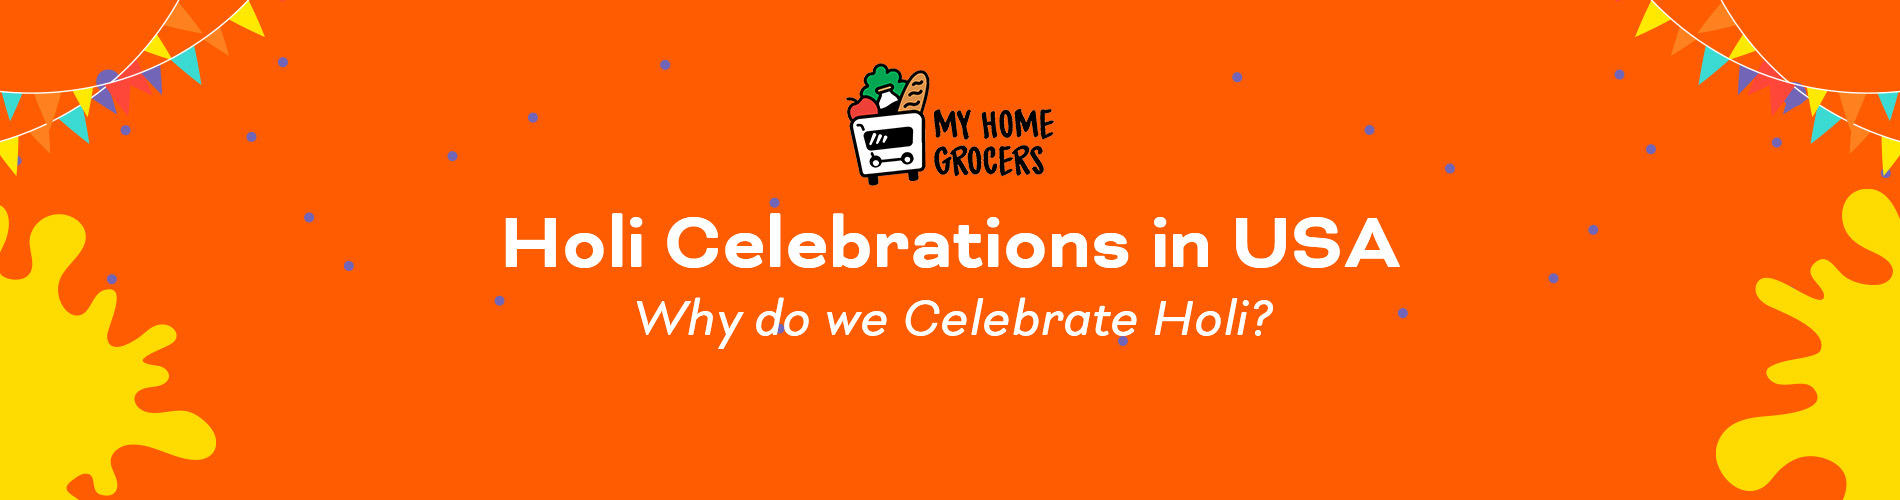 Holi Celebrations in USA | Why do we Celebrate Holi